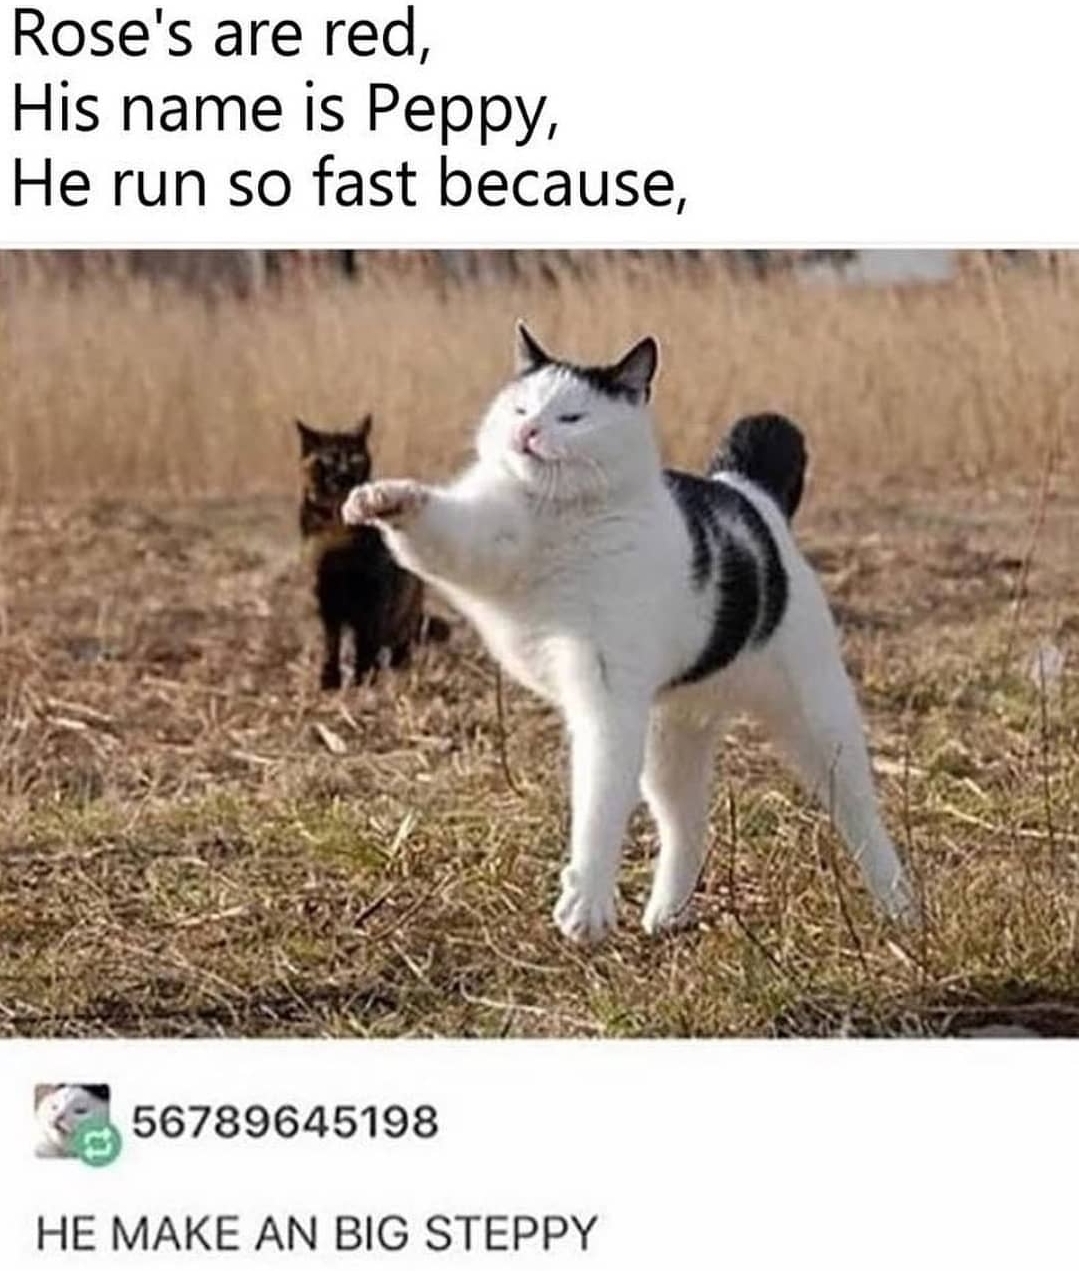 He run so fast